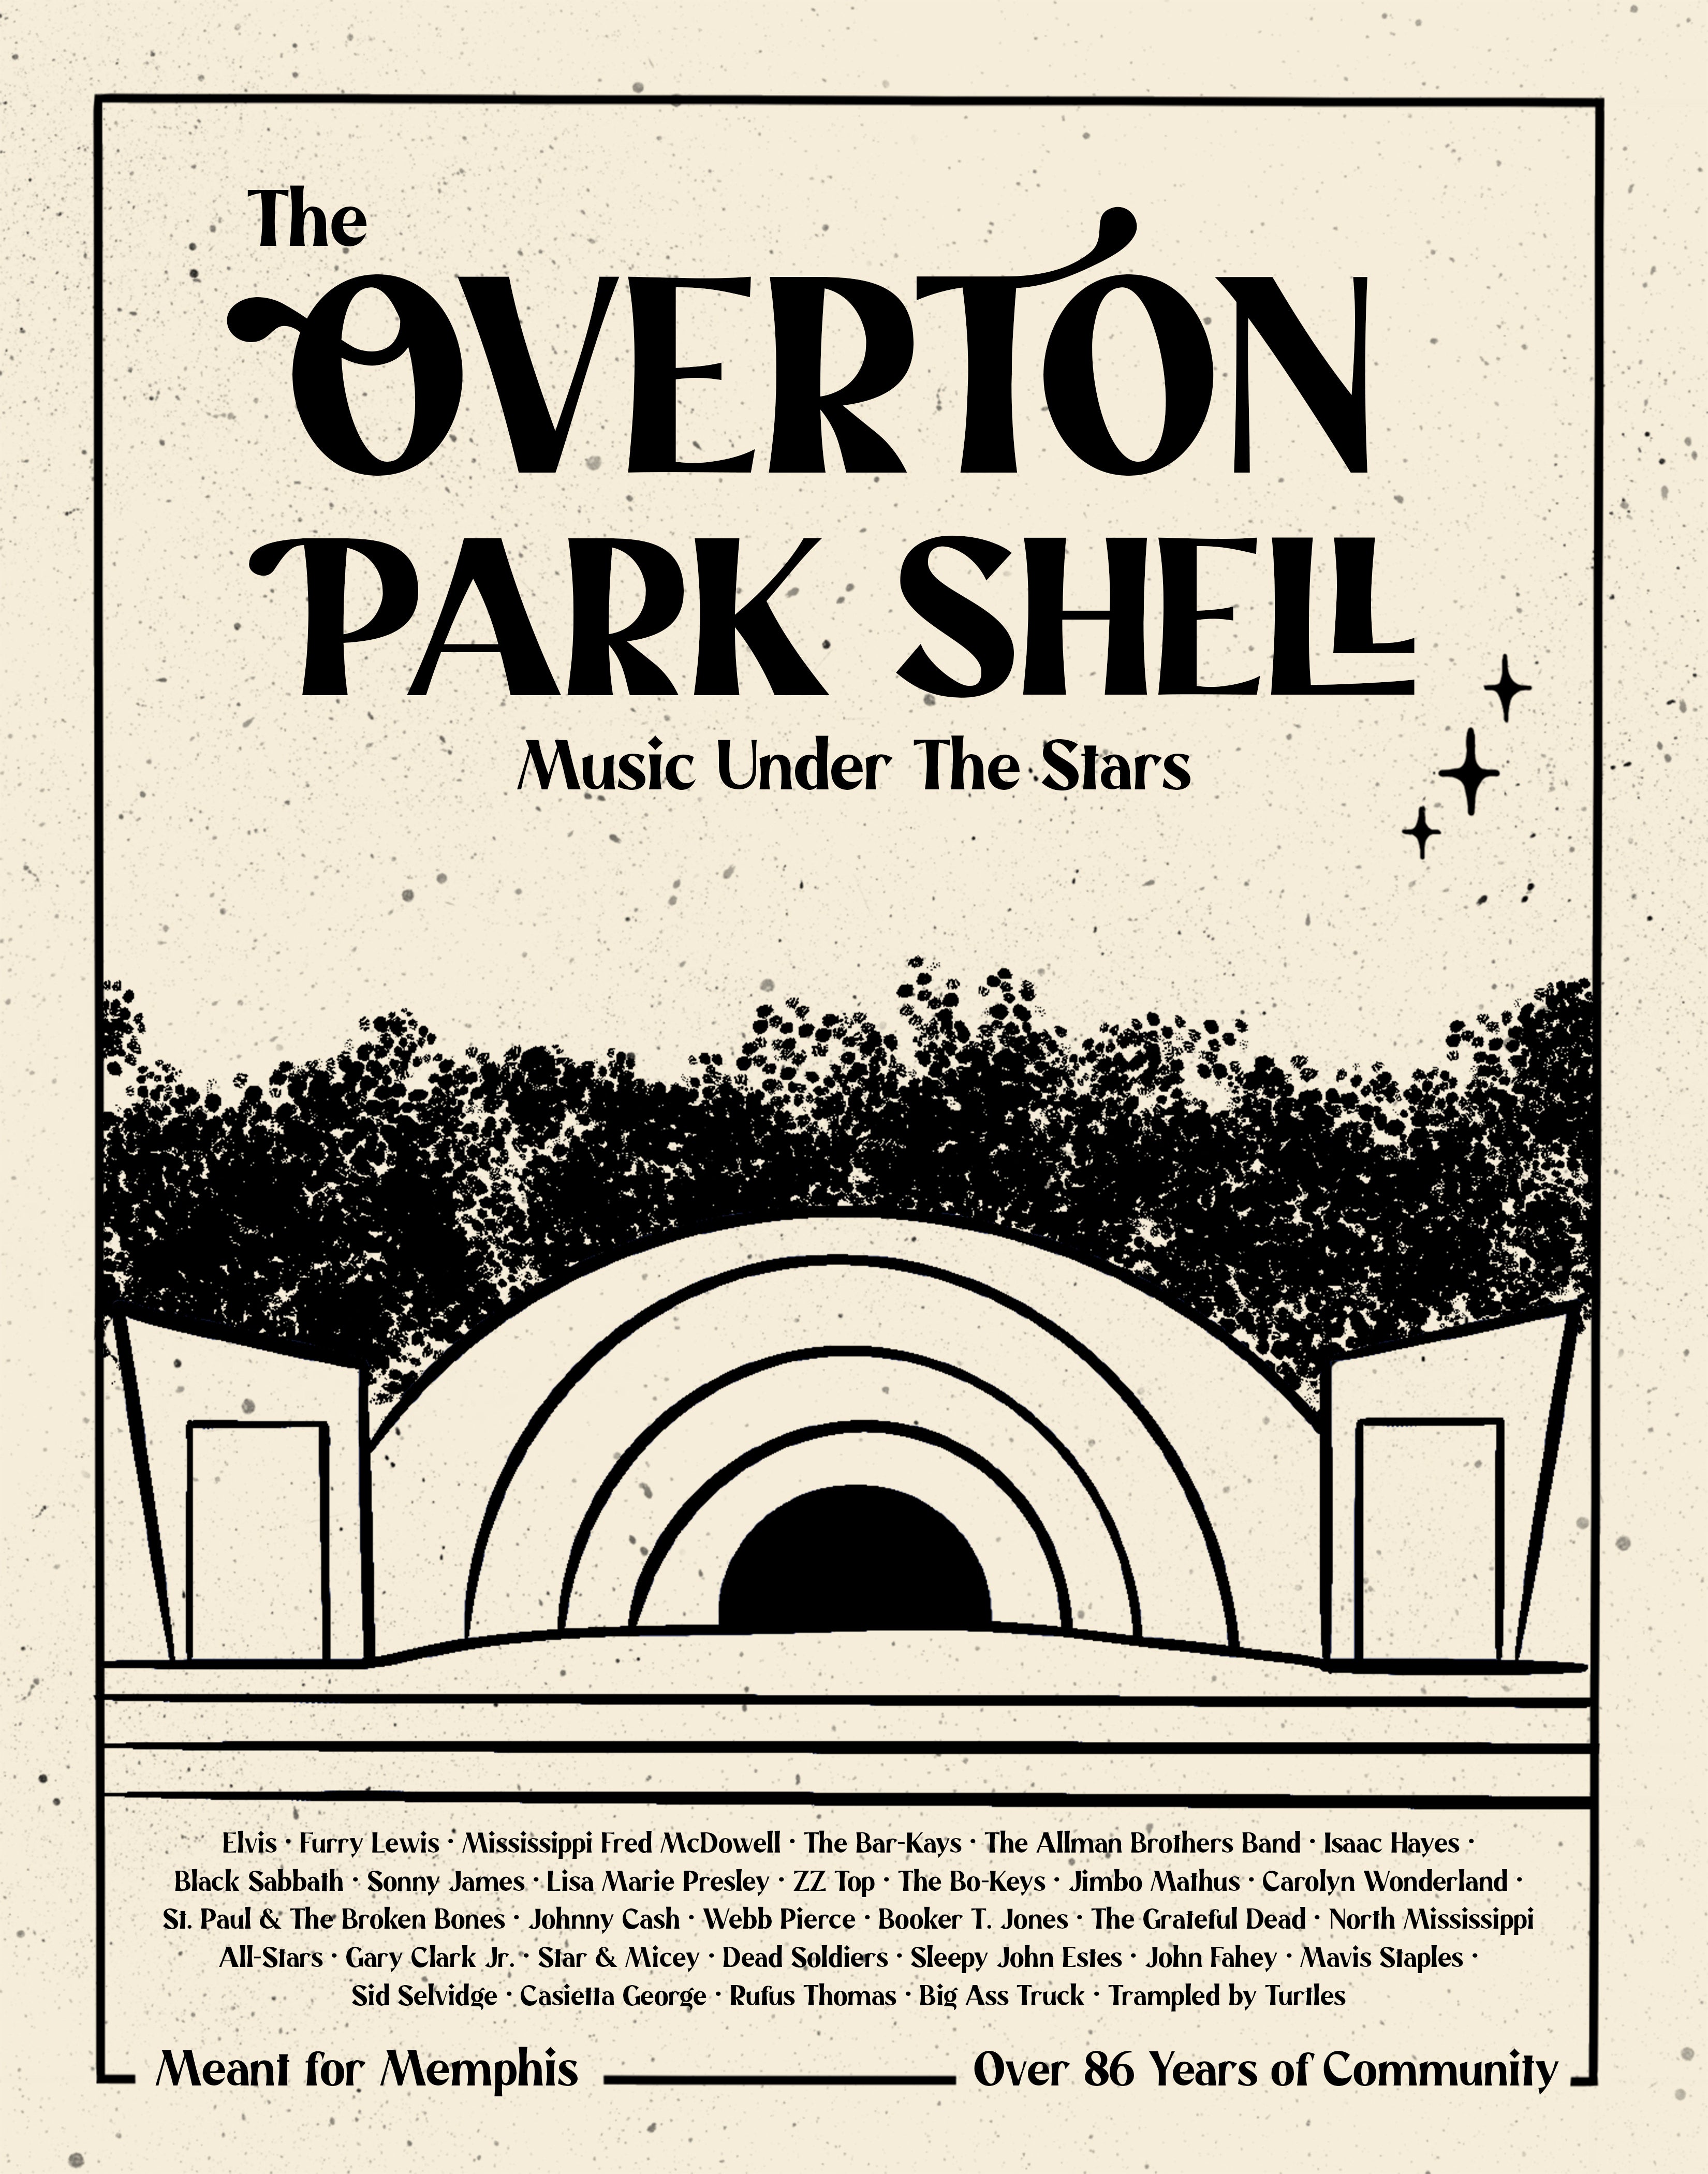 Overton Park Shell - Under the Stars